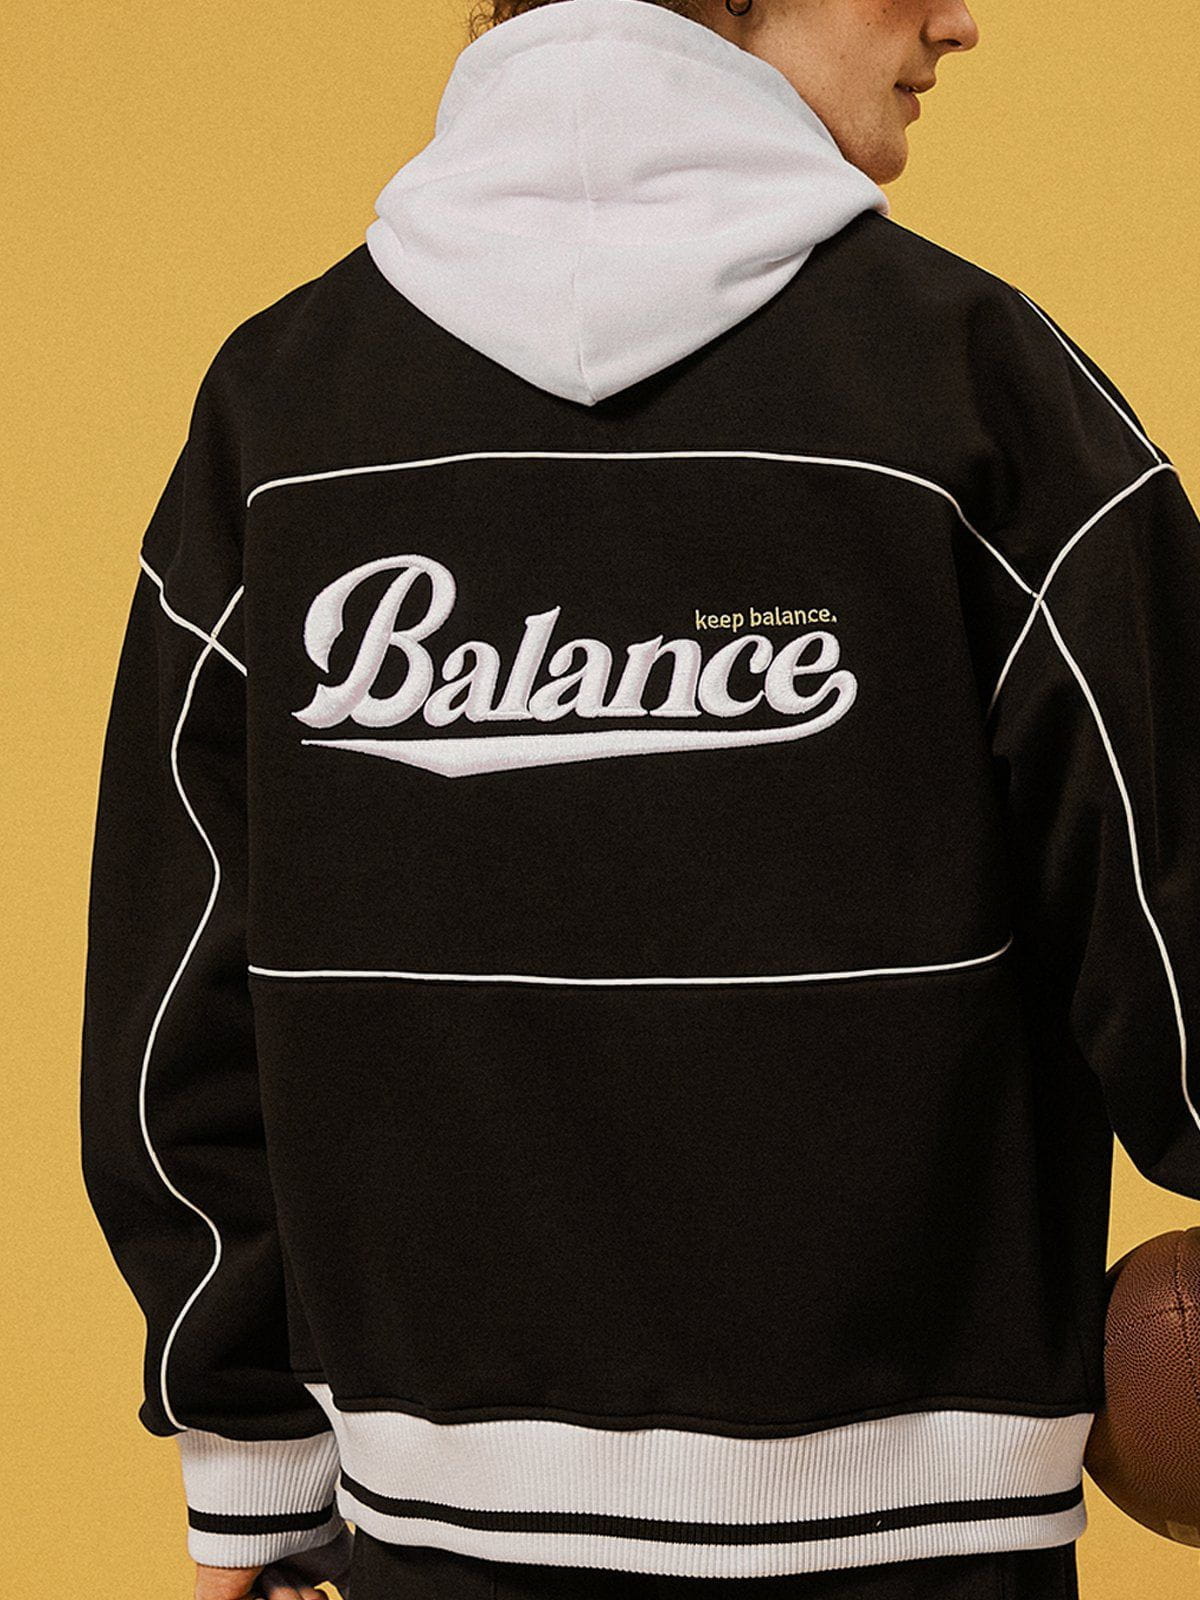 "Balance" Reflective Line Varsity Jacket Streetwear Brand Techwear Combat Tactical YUGEN THEORY